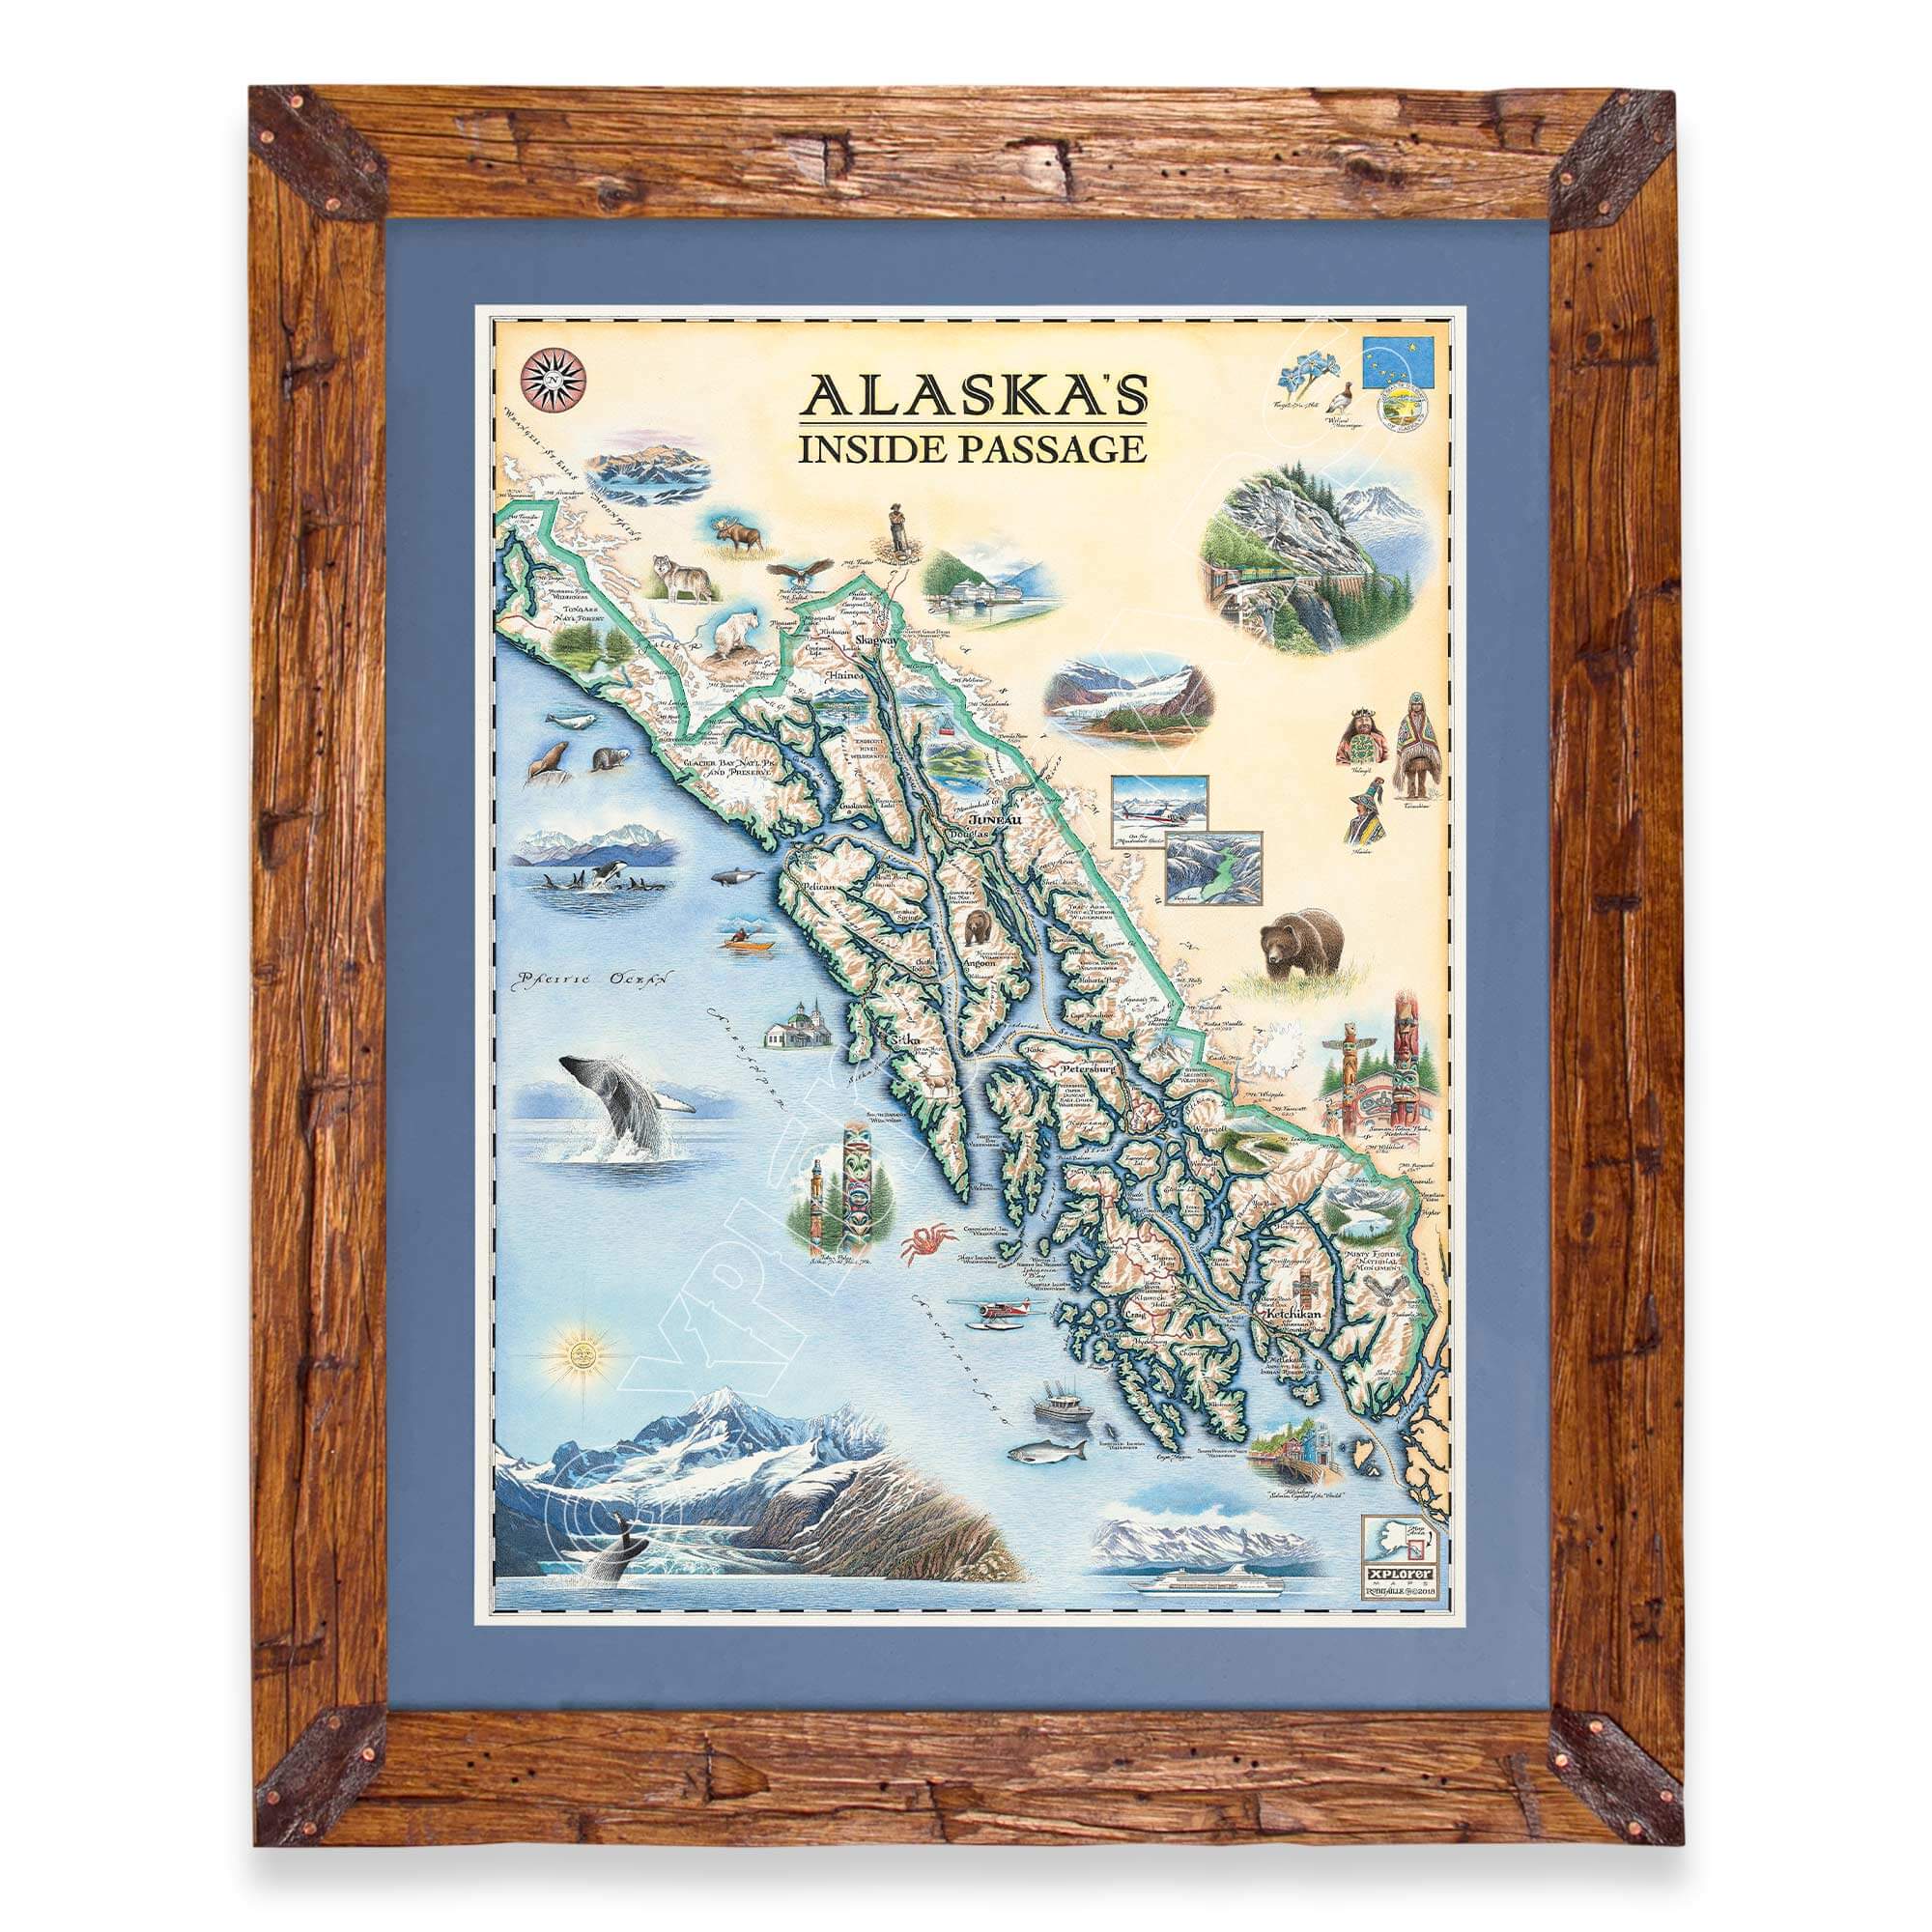 Alaska's Inside Passage hand-drawn map in a Montana hand-scraped pine wood frame with blue mat.